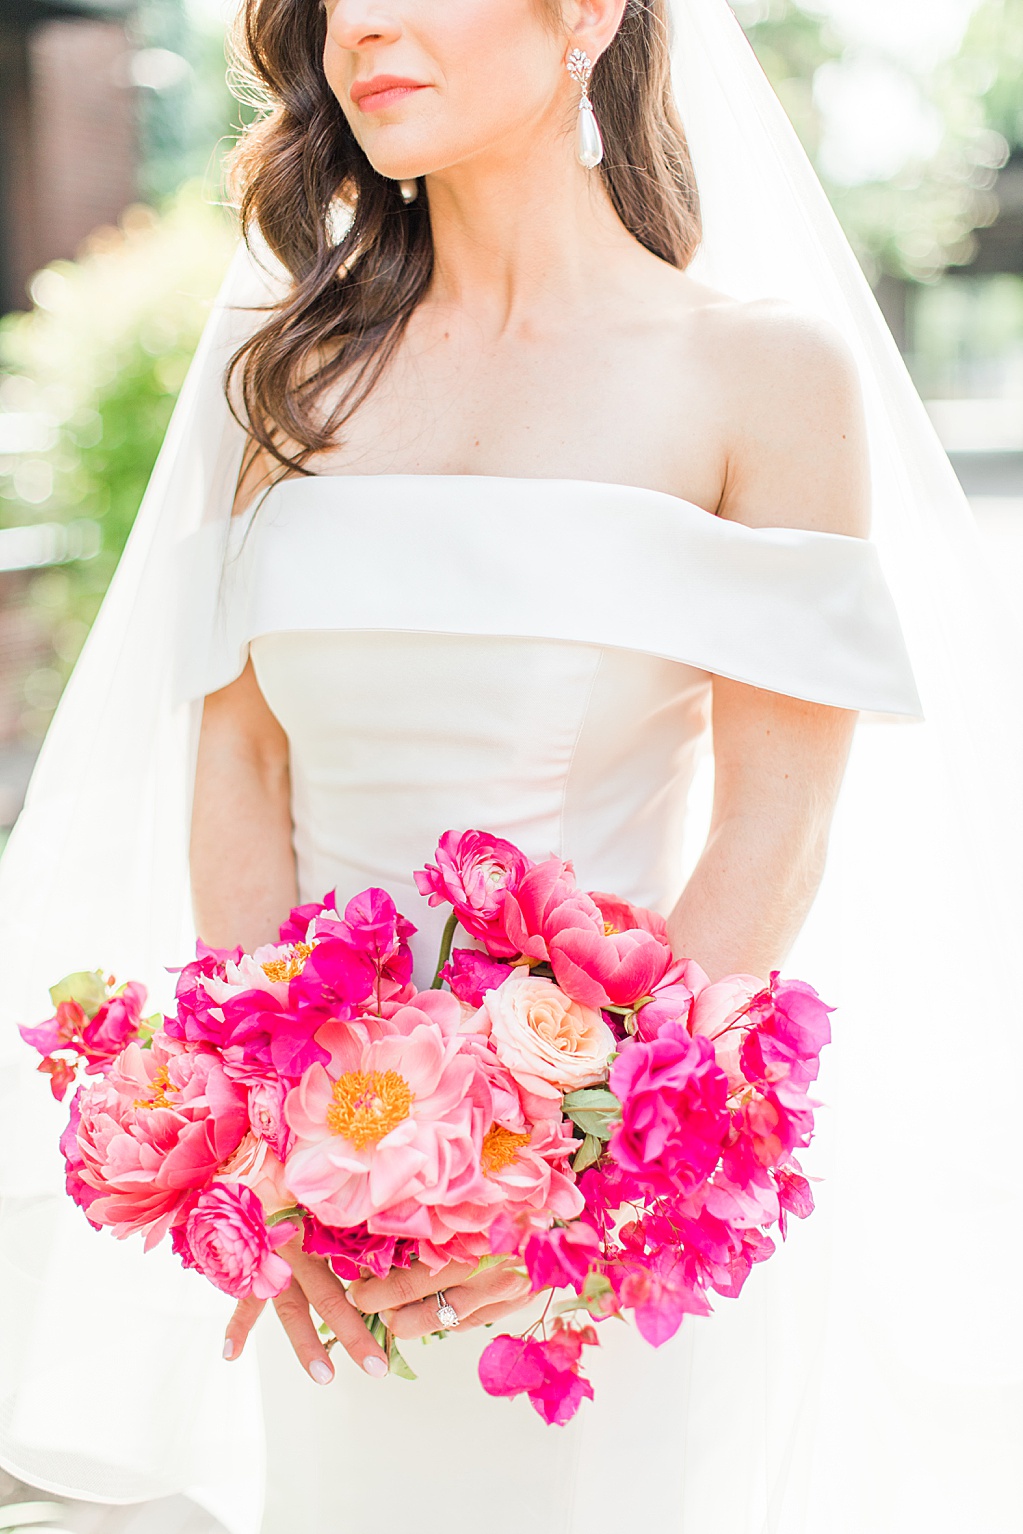 Spring Bridal Photos at The Hotel Emma in San Antonio Texas with Bougainvillea bouquet 0020